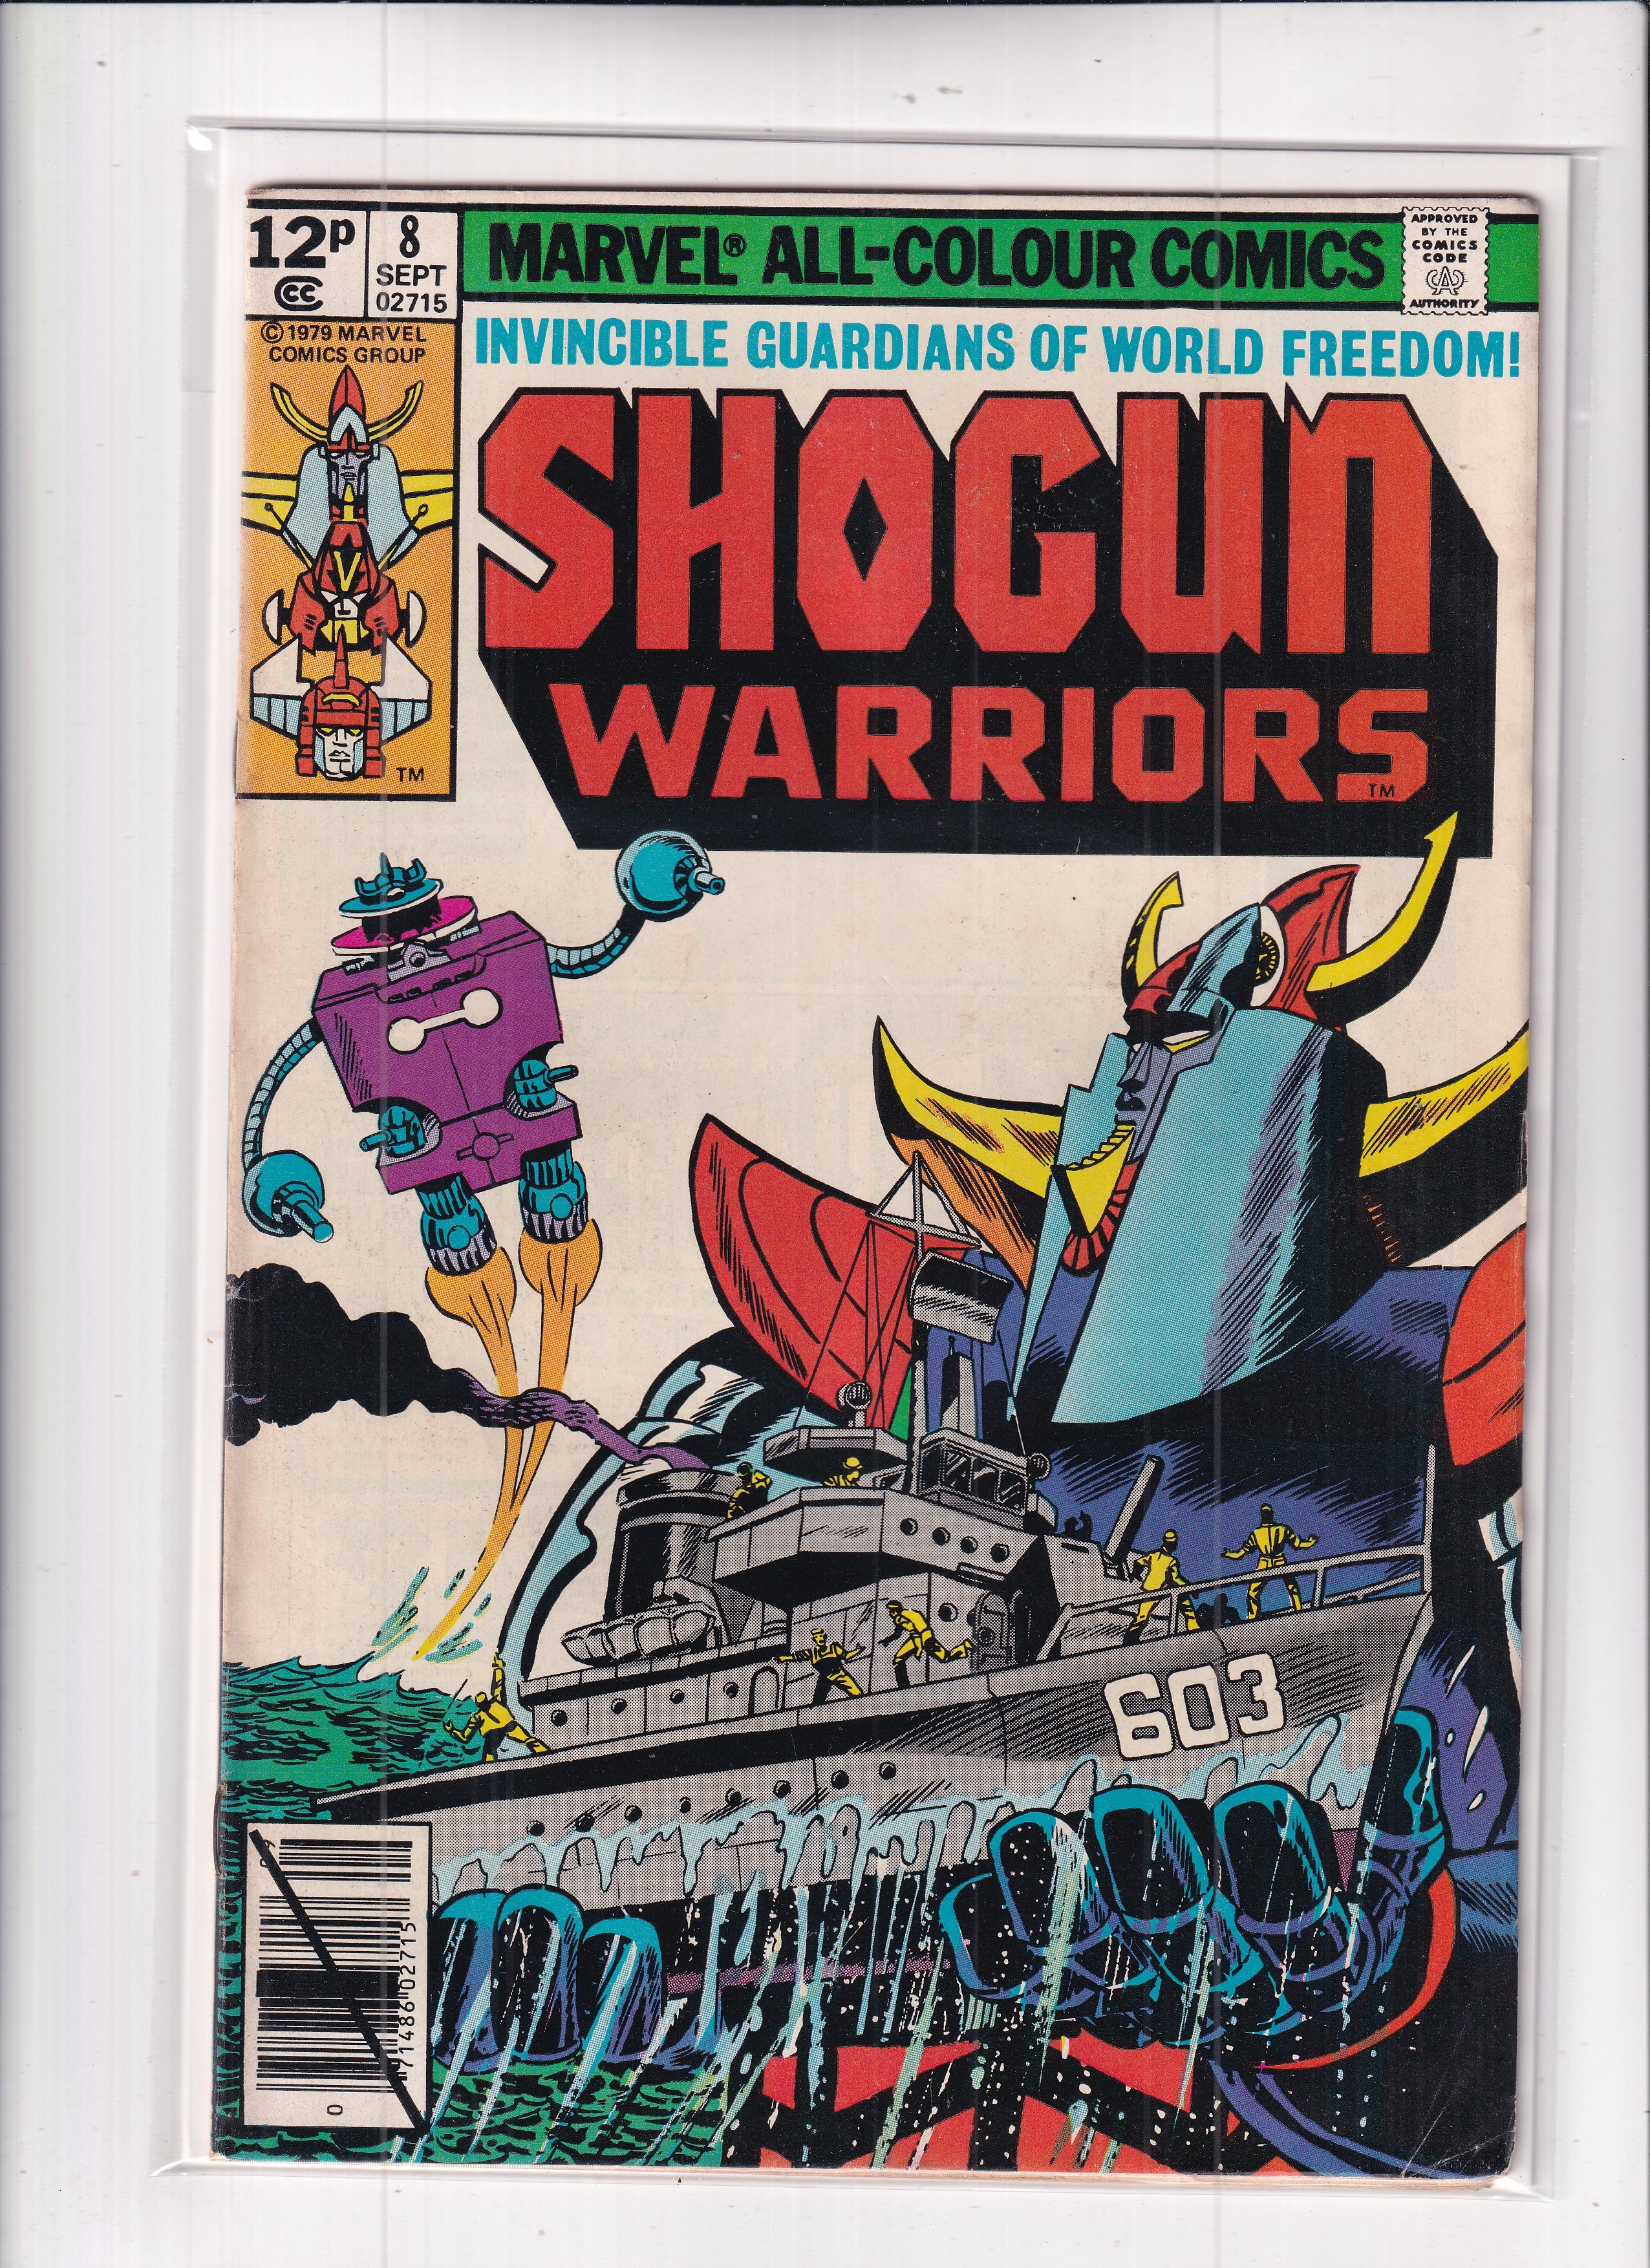 SHOGUN WARRIORS #8